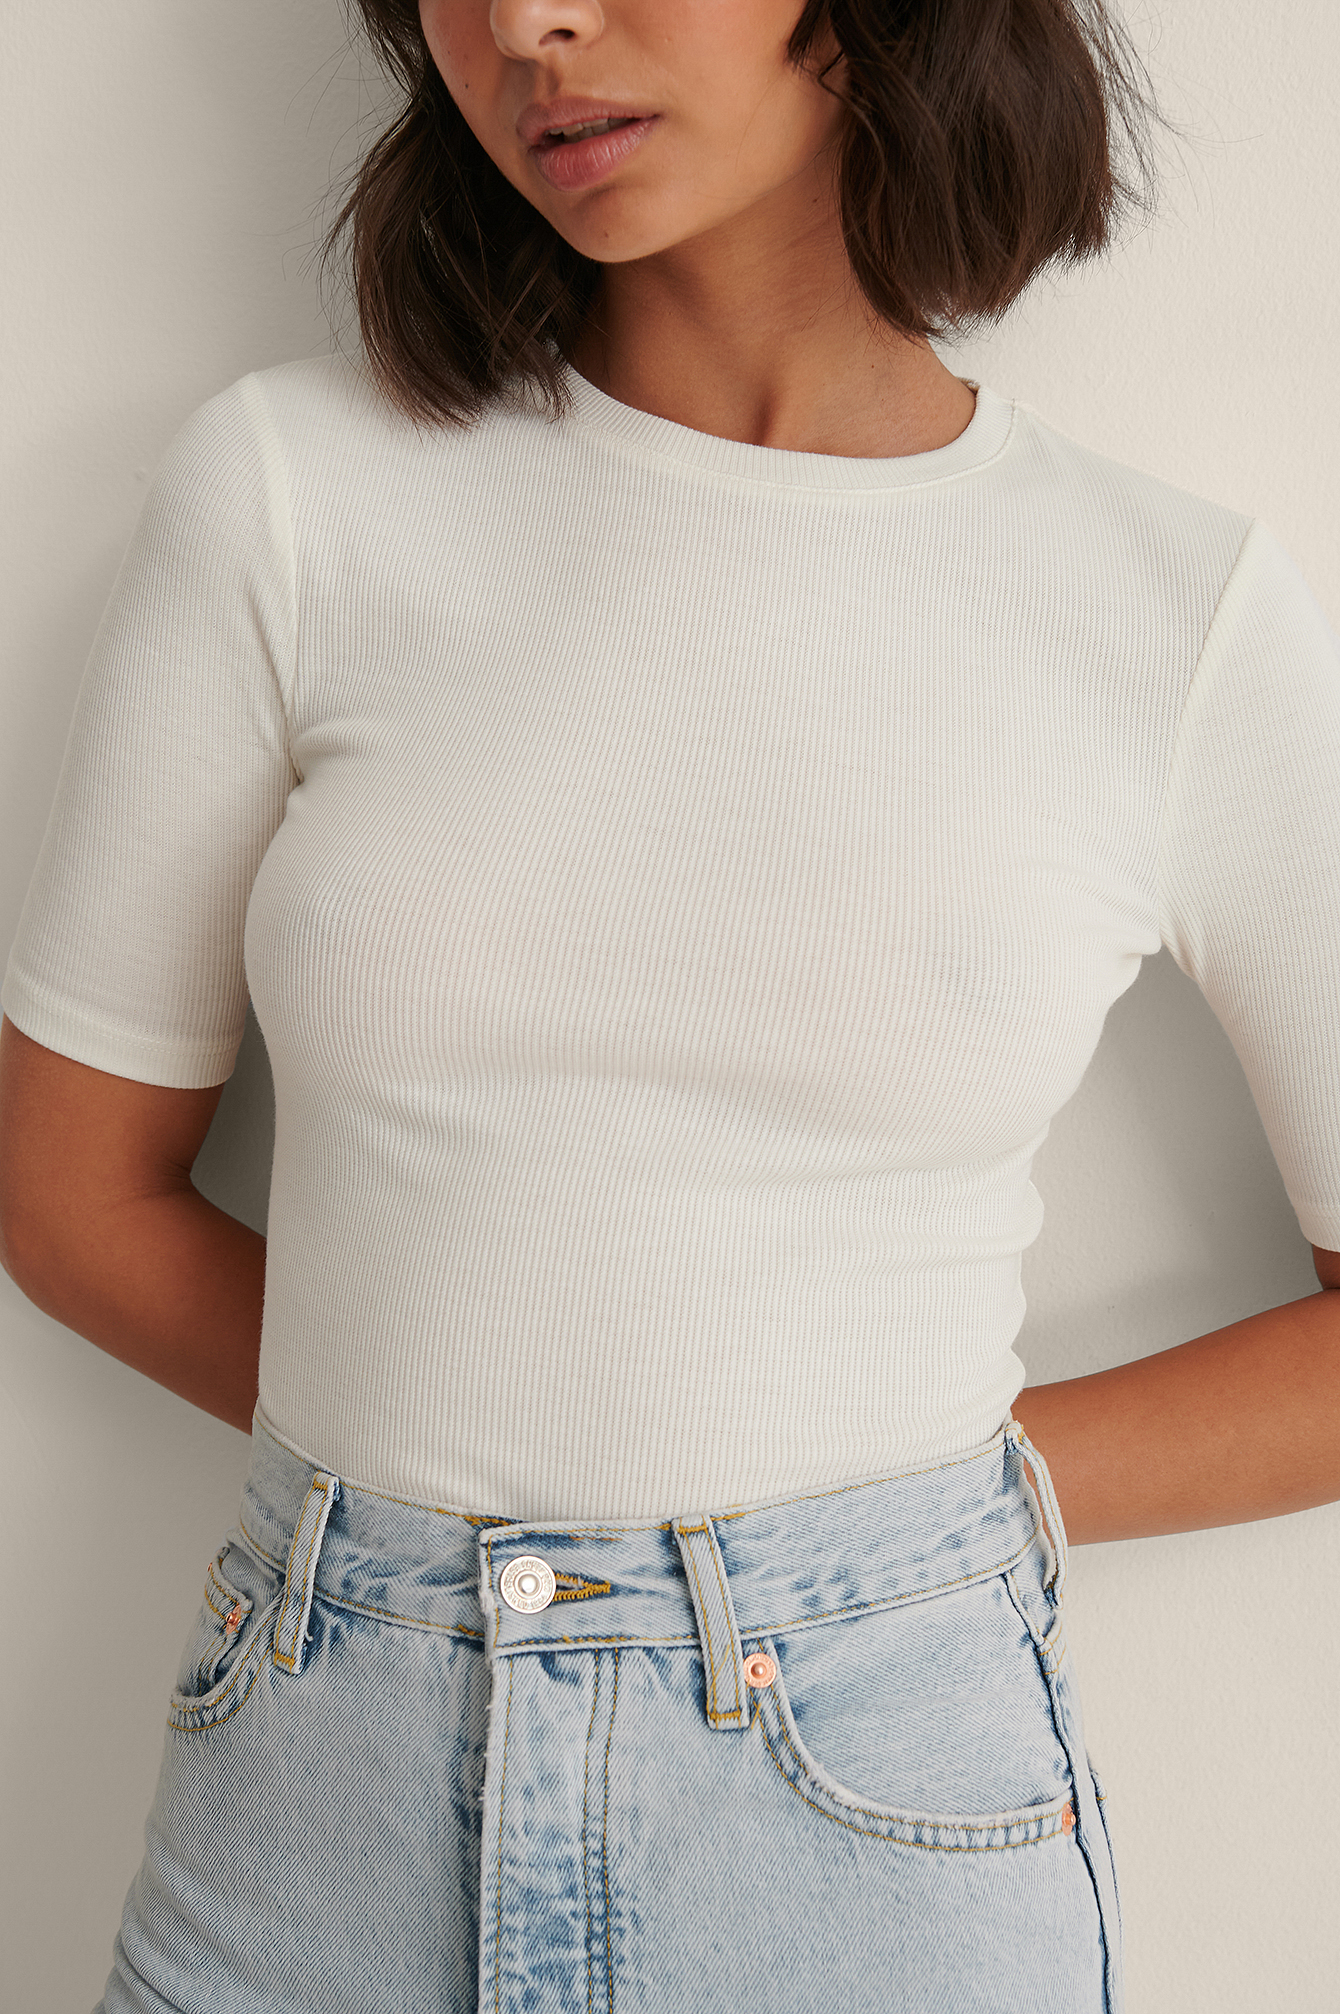 Realdo Fashion Women Long Sleeve O-Neck Tight Elastic T-Shirt Blouses Crop Tops